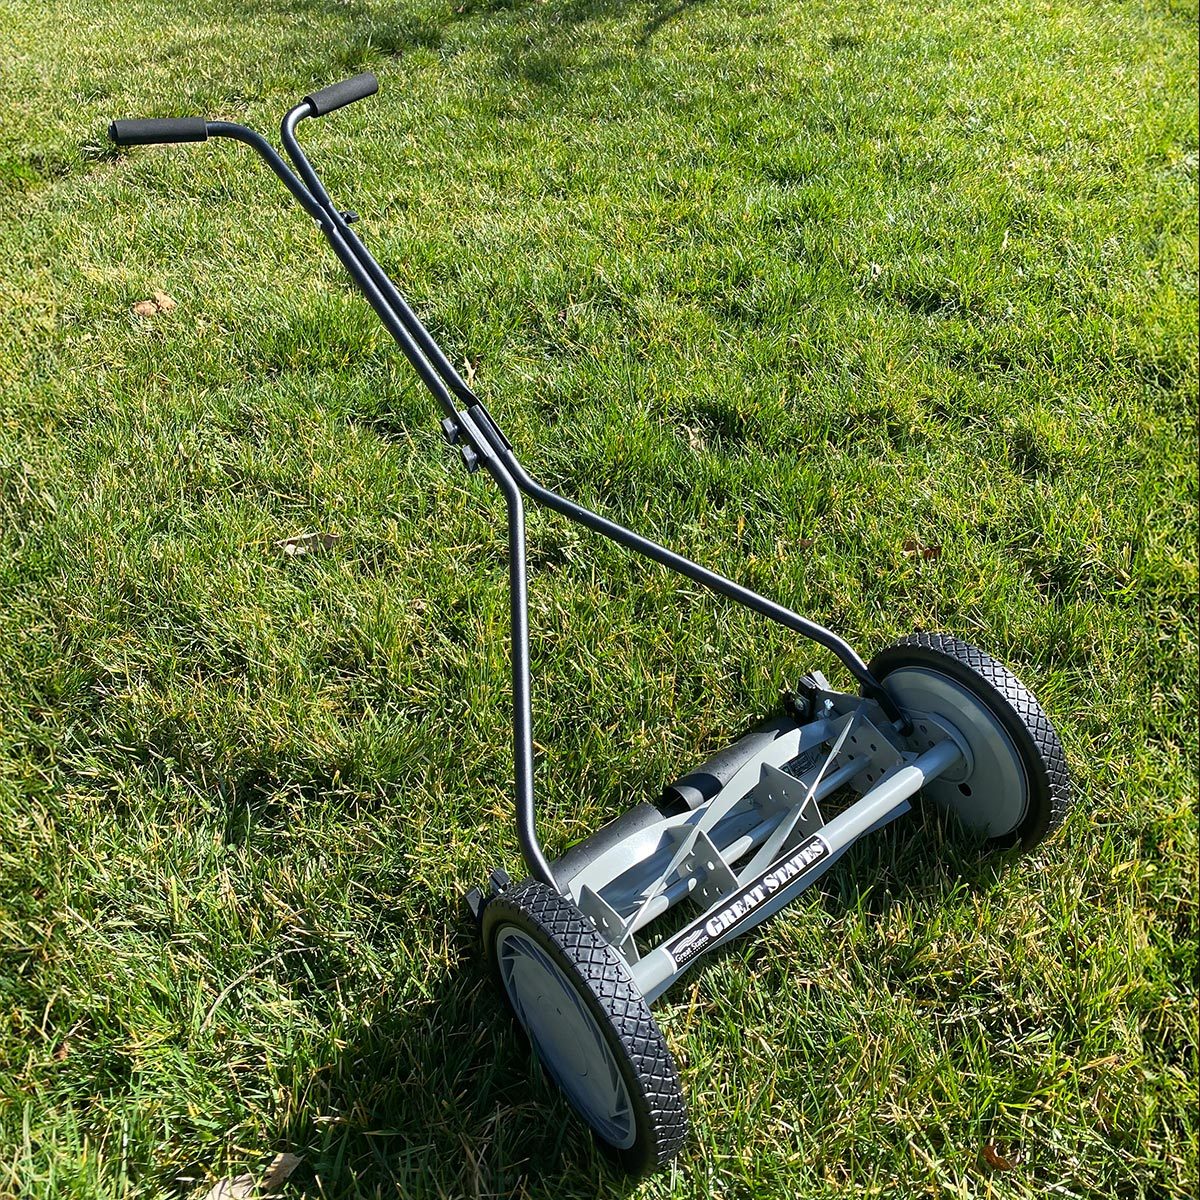 Earthwise 18-in 5 Reel Lawn Mower at